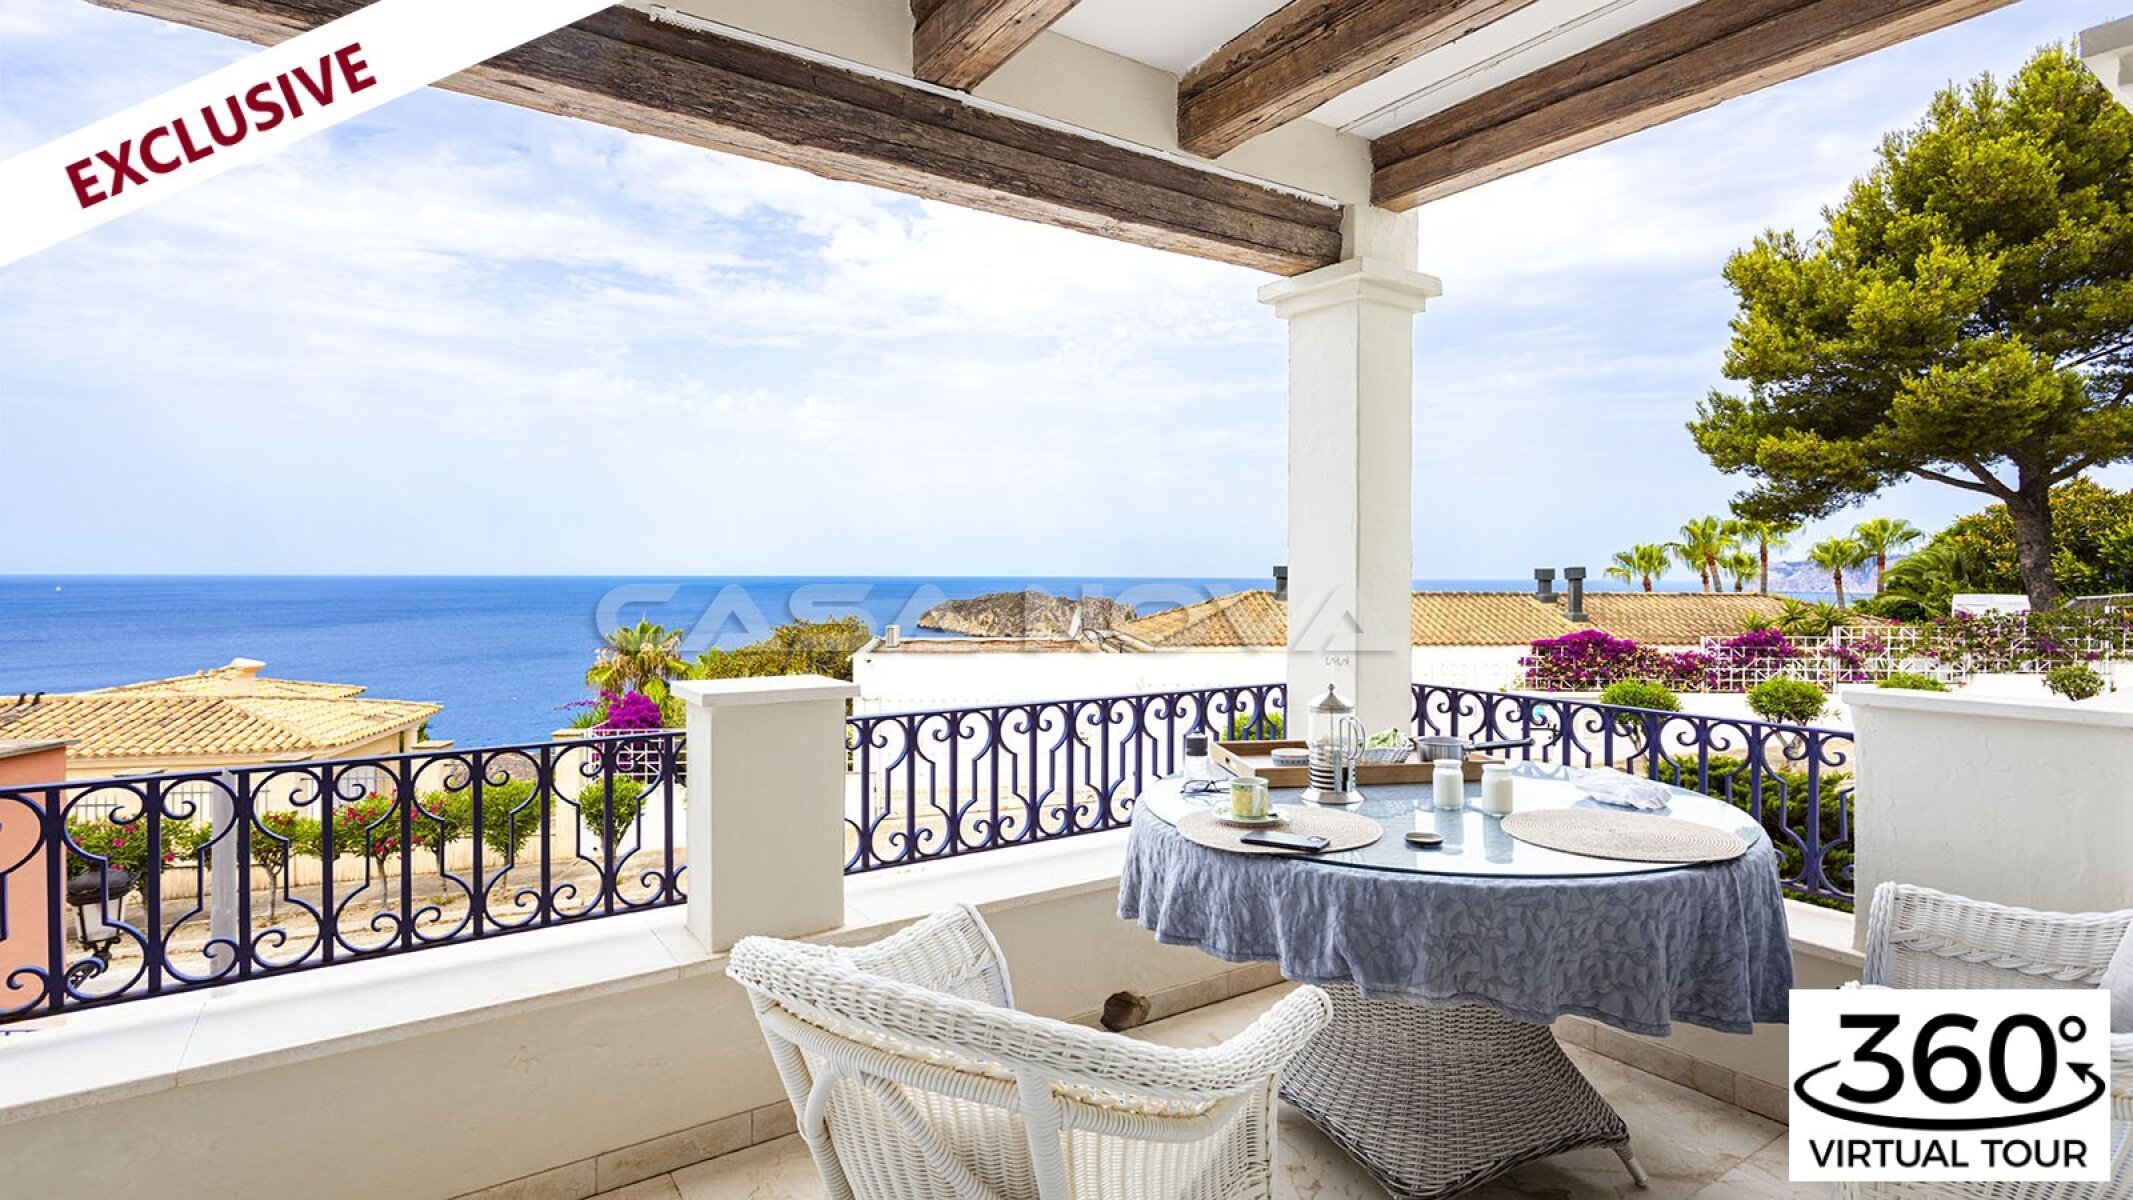 Fant�stico apartamento en Mallorca con espectaculares vistas al mar